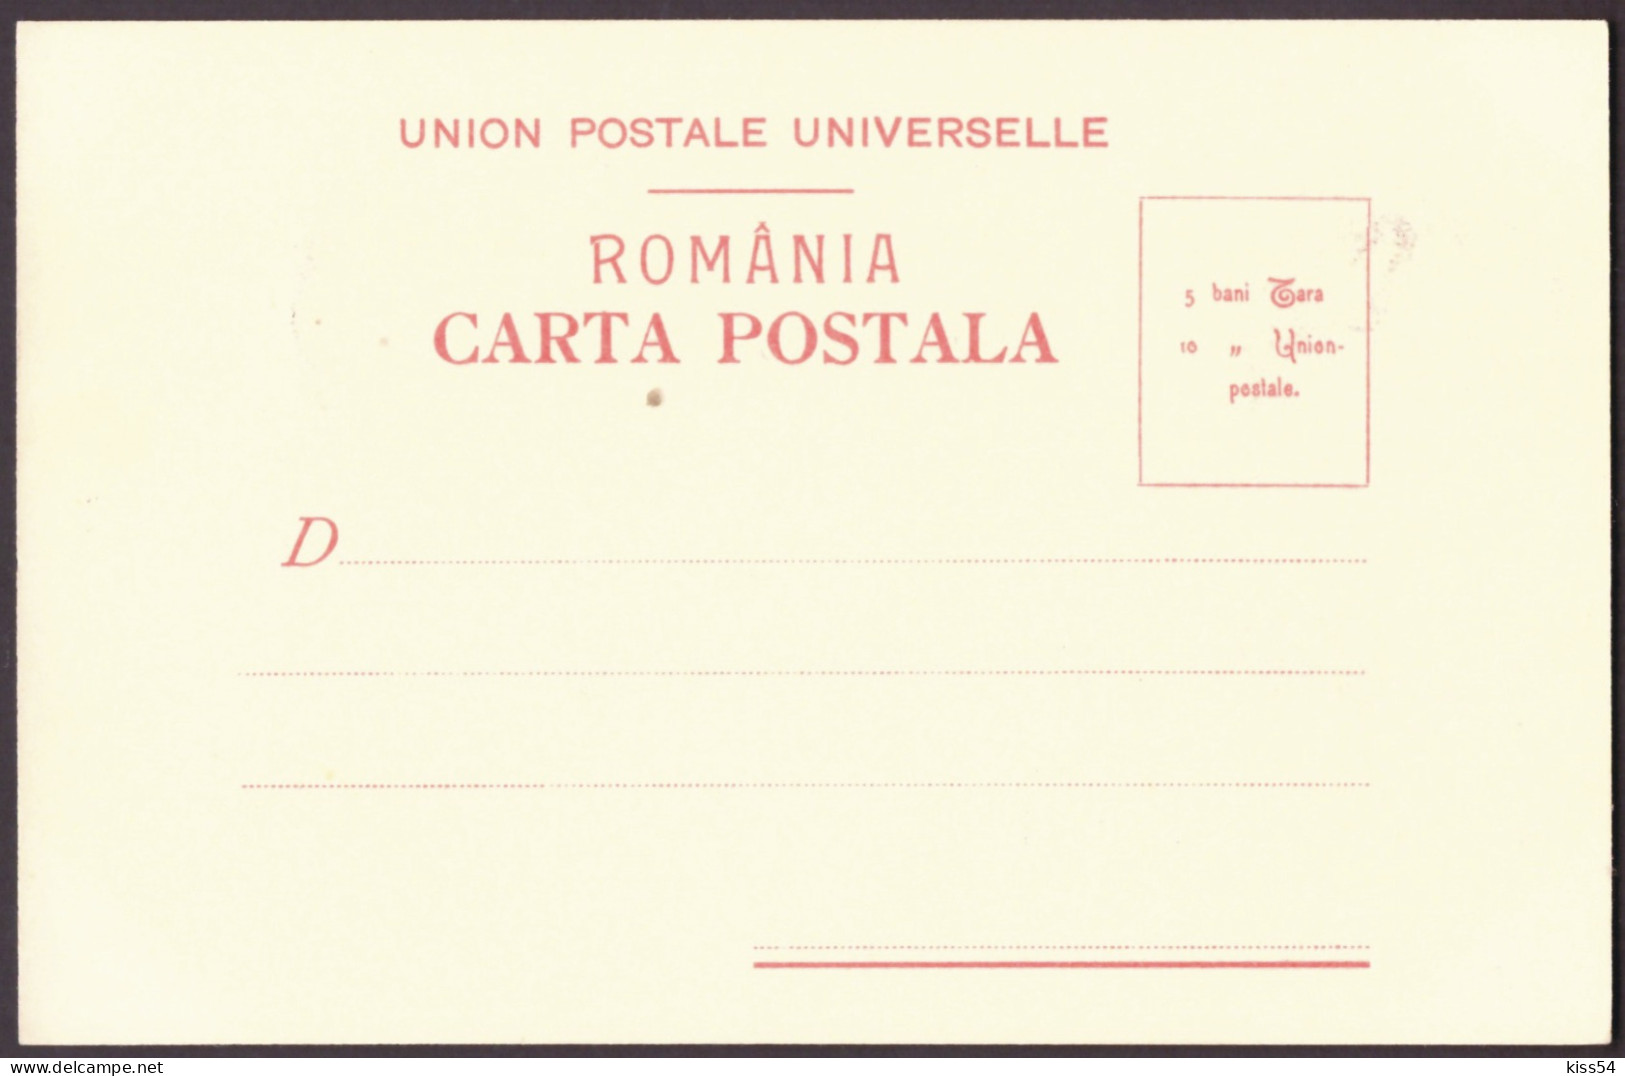 RO 40 - 24969 LIFE In The COUNTRYSIDE, Litho, Romania - Old Postcard - Unused - Rumänien